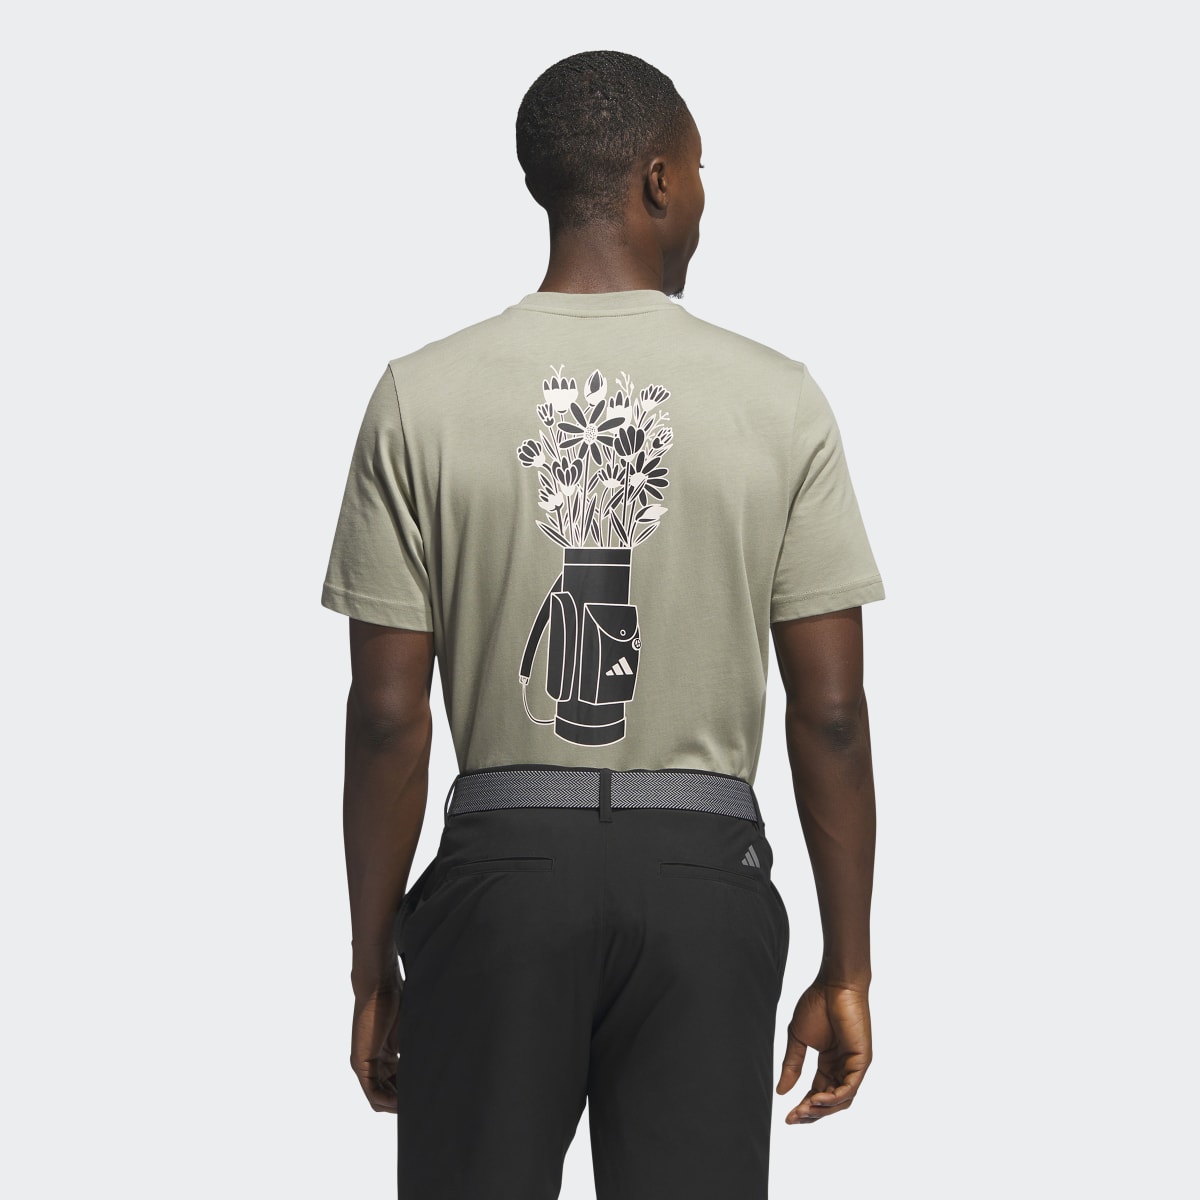 Adidas Golf Graphic T-Shirt. 4